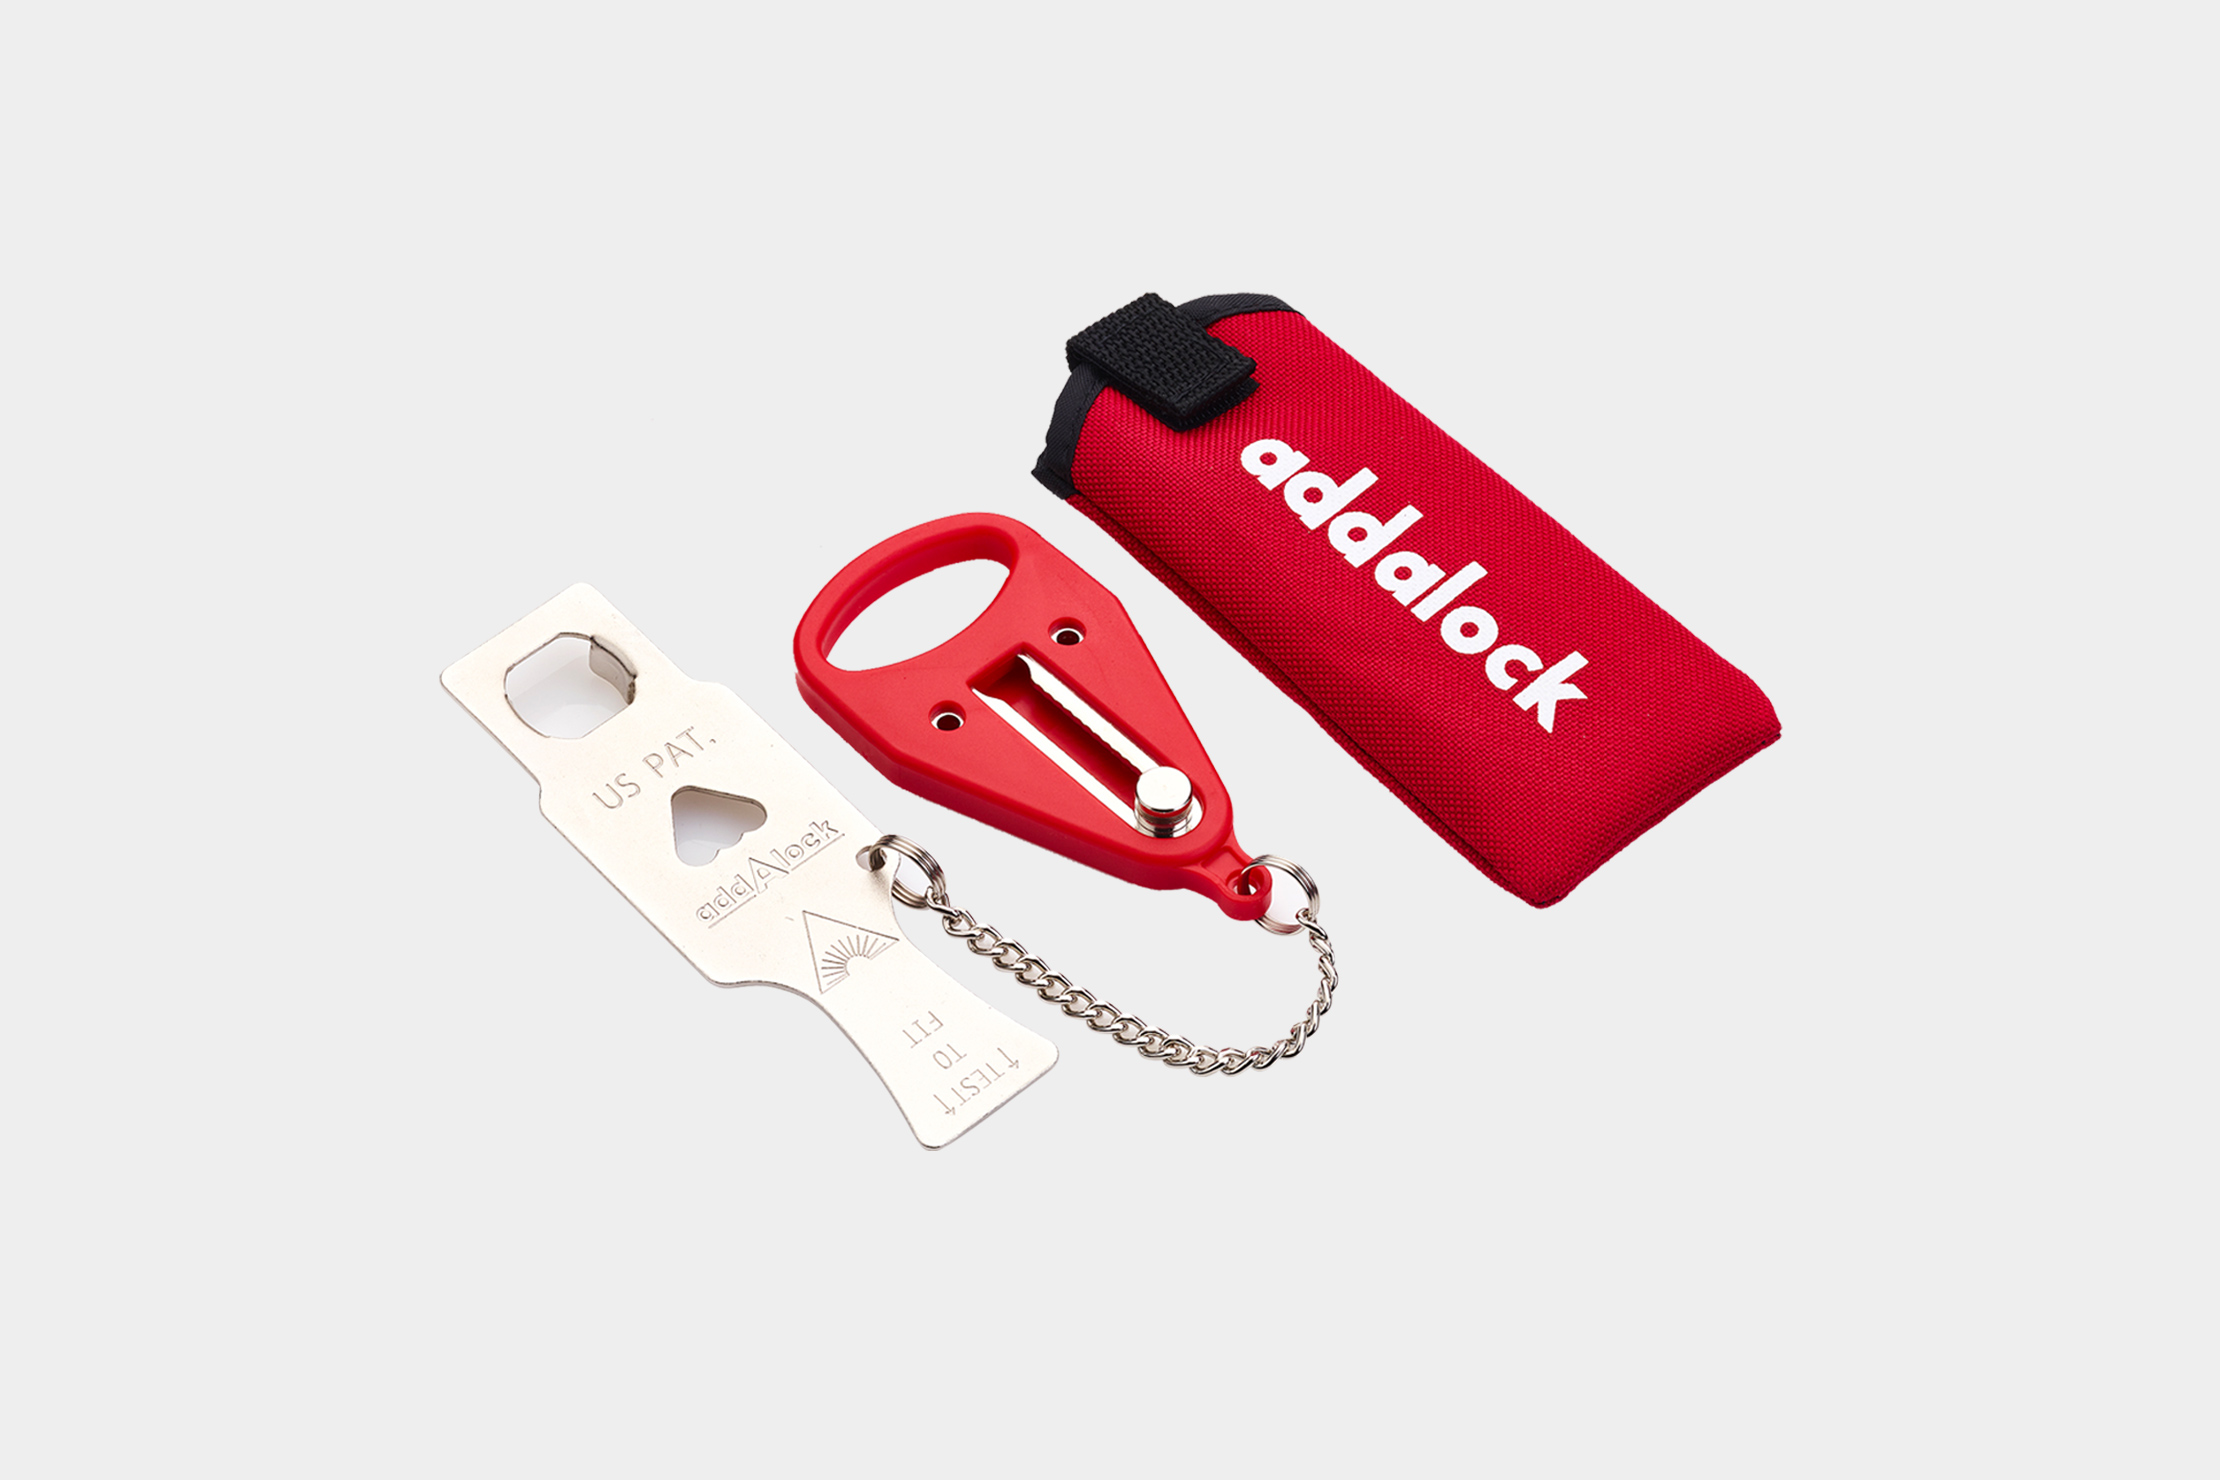 Addalock The Original Portable Door Lock for Travel & Home